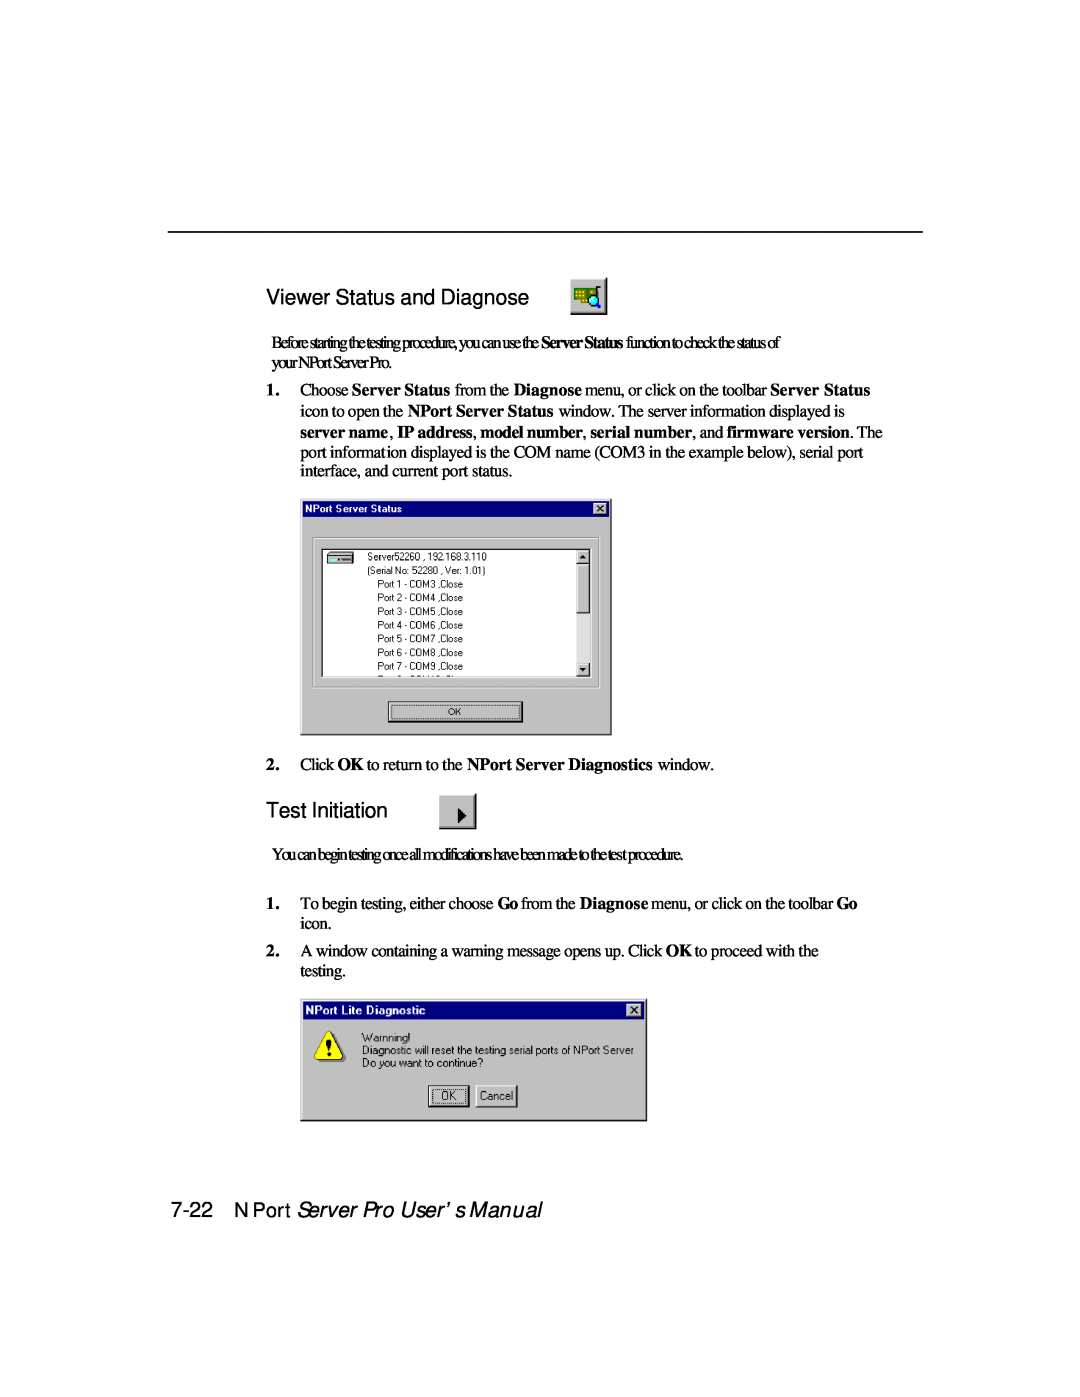 Moxa Technologies DE-303, DE-308 manual Viewer Status and Diagnose, Test Initiation, NPort Server Pro User’s Manual 